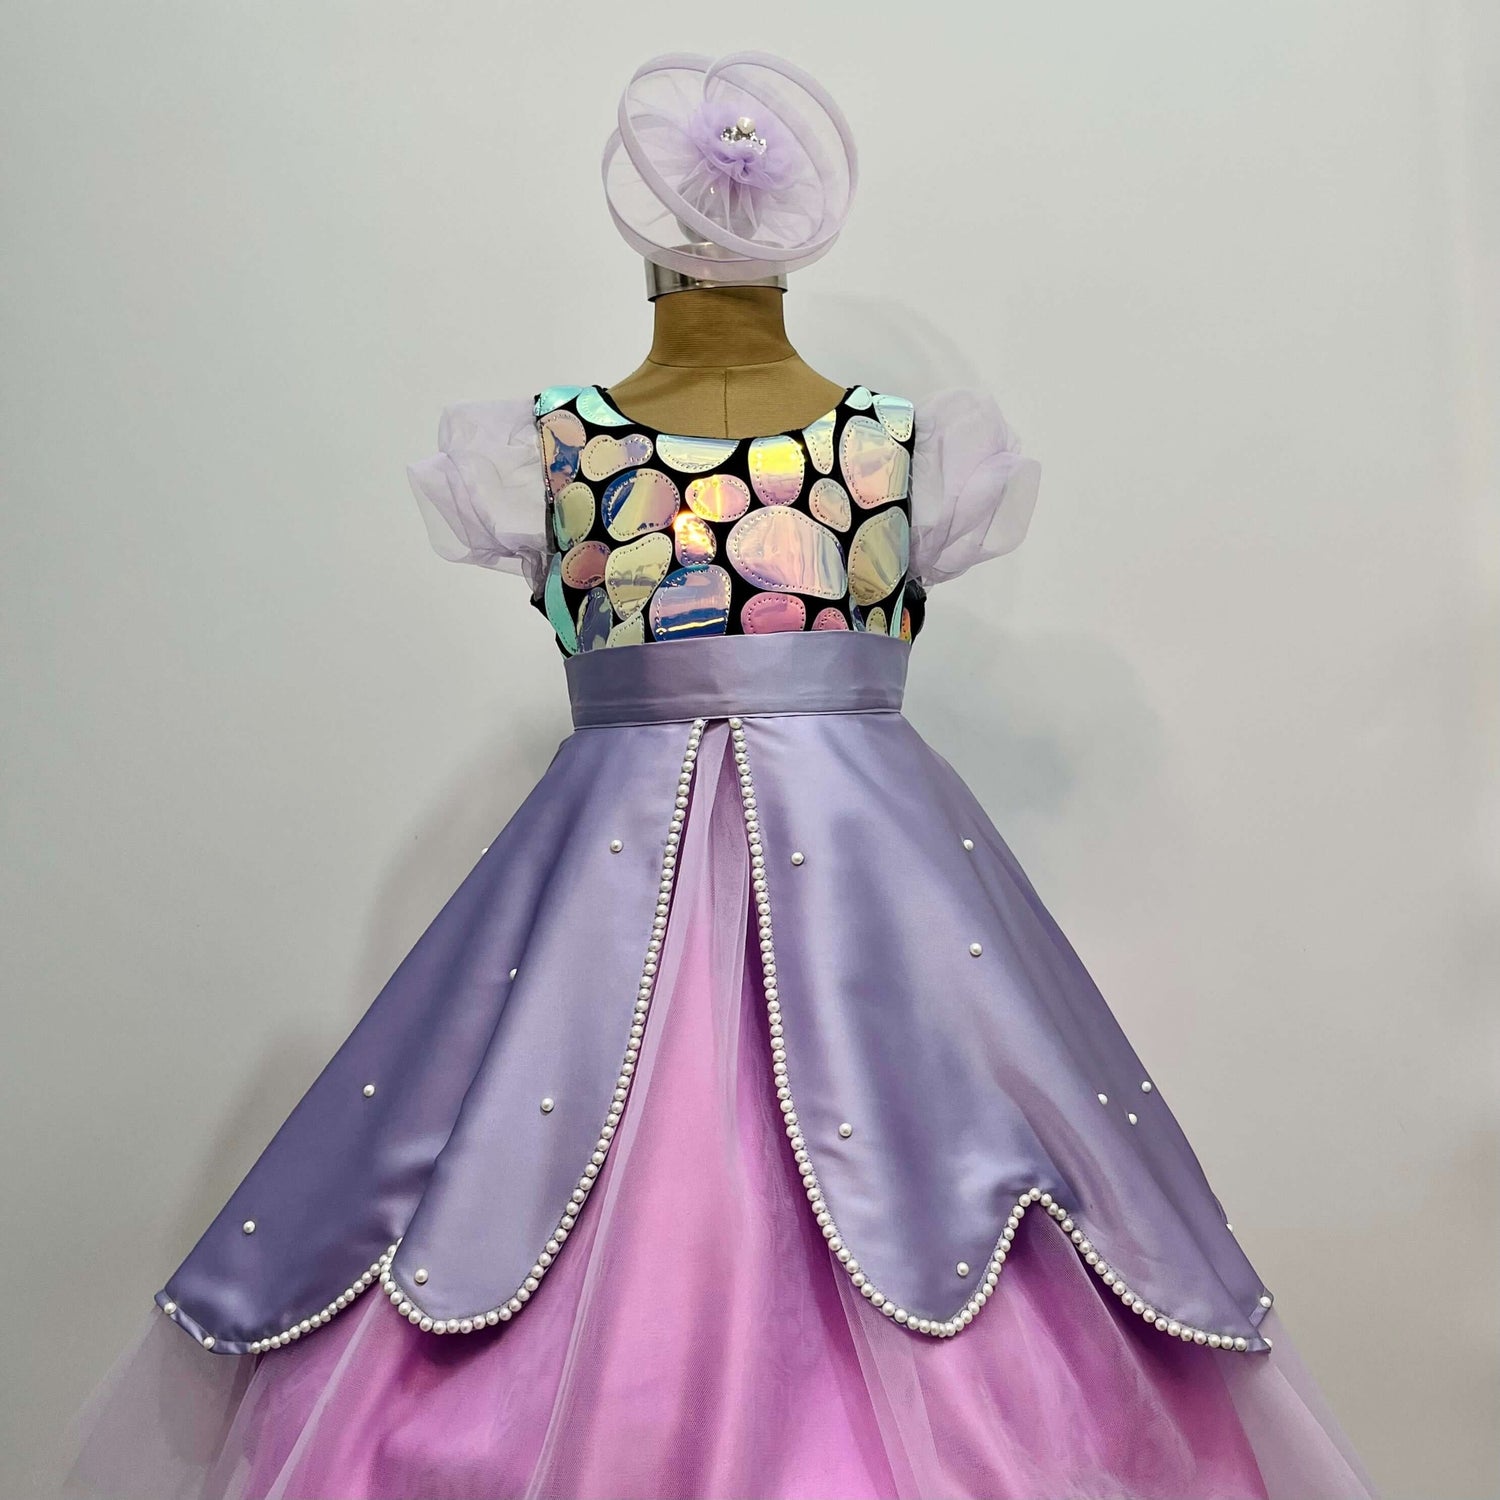 Princess Sofia Theme Designer Dresses and Hair Accessories for Birthdays